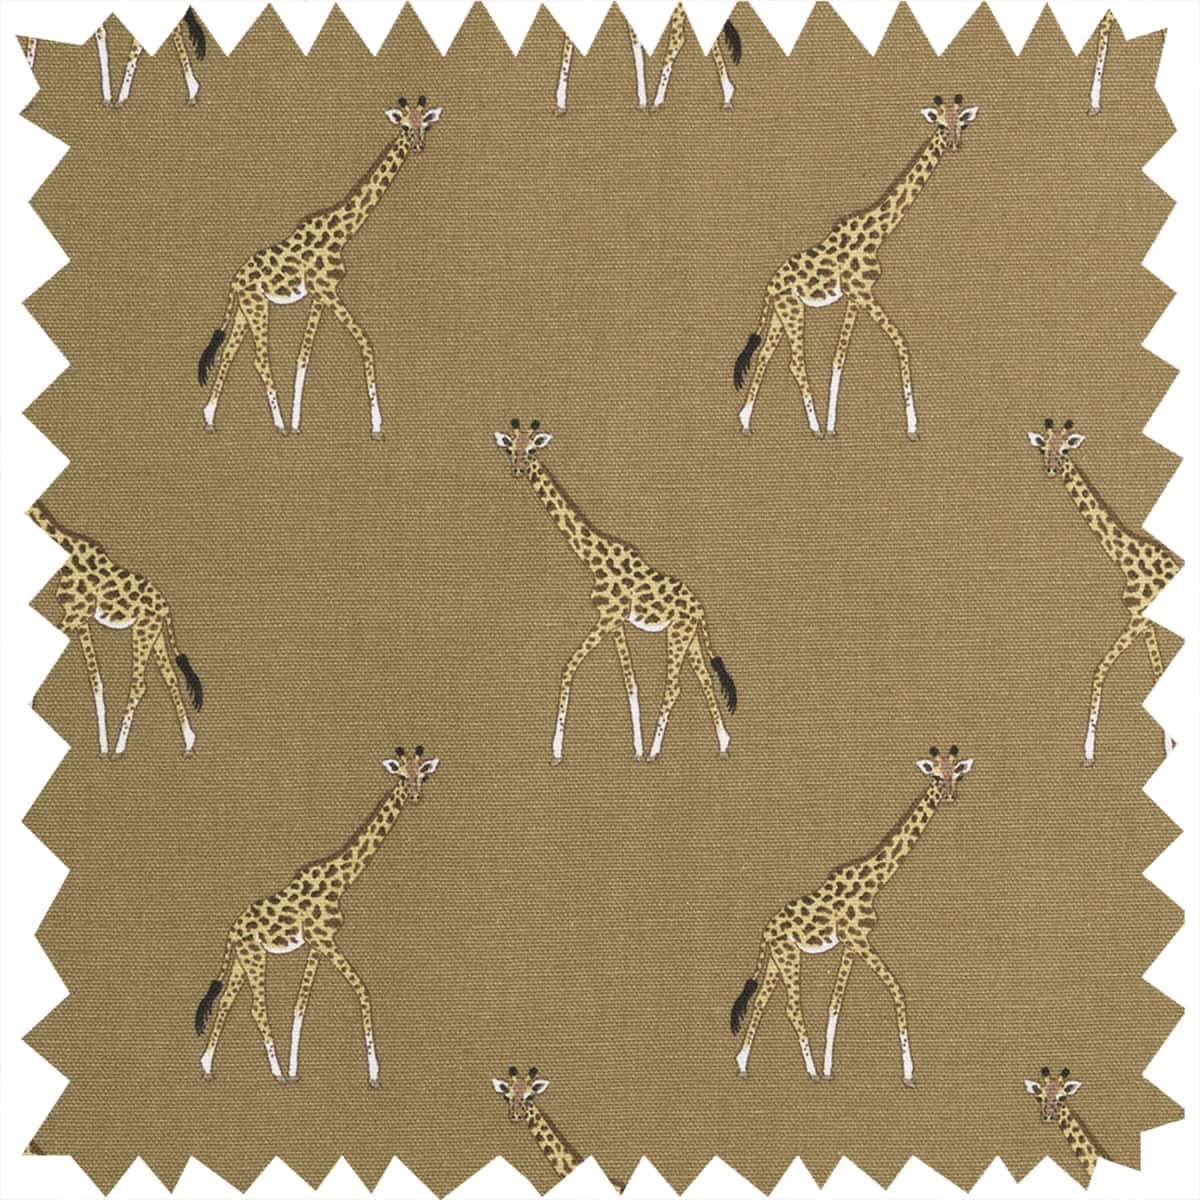 Giraffe Adult Apron